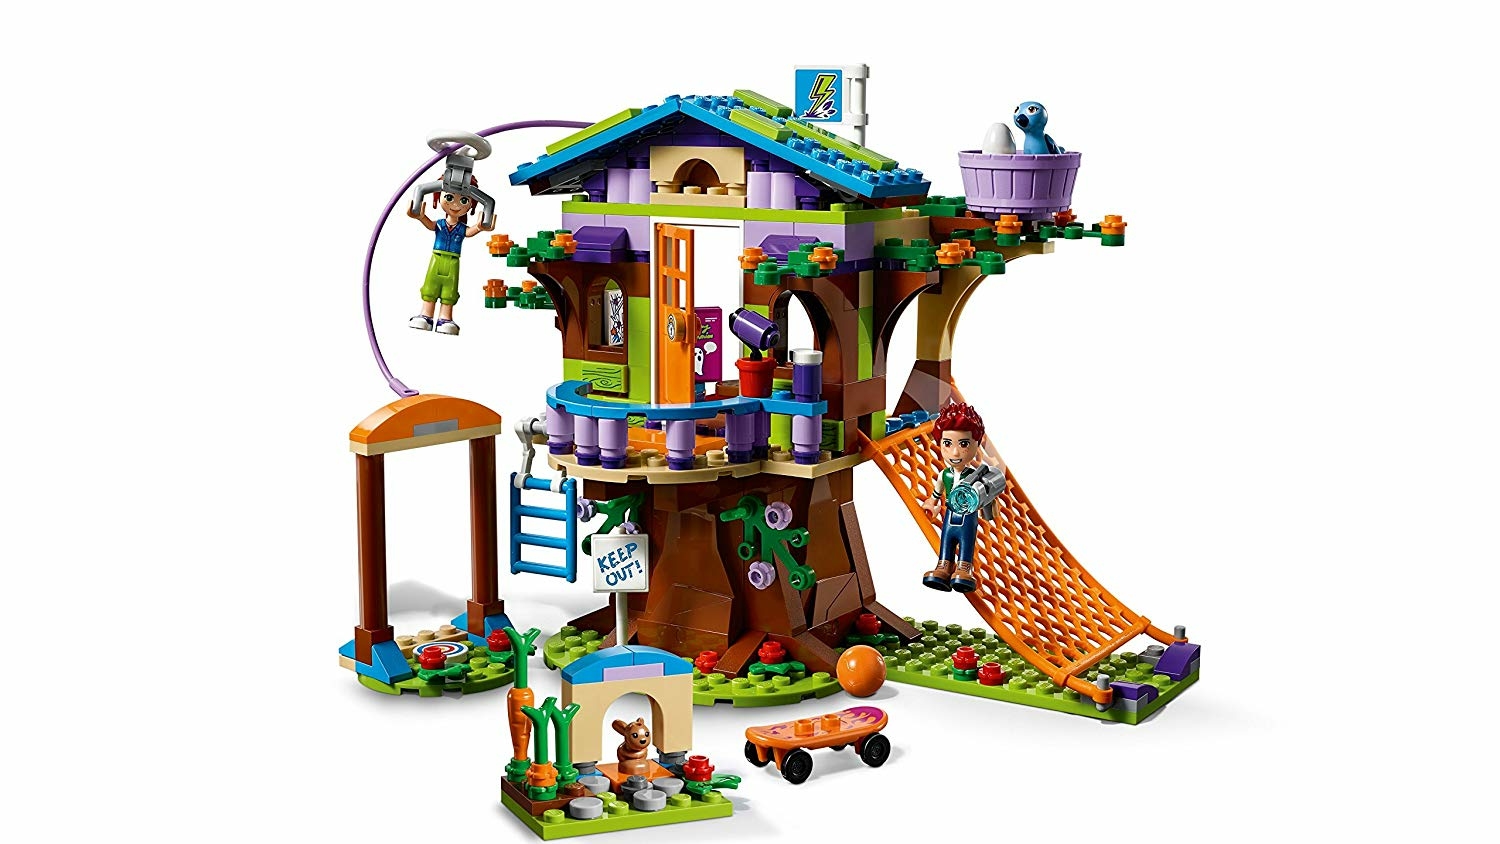 LEGO Friends - La cabane dans les arbres de Mia - 41335